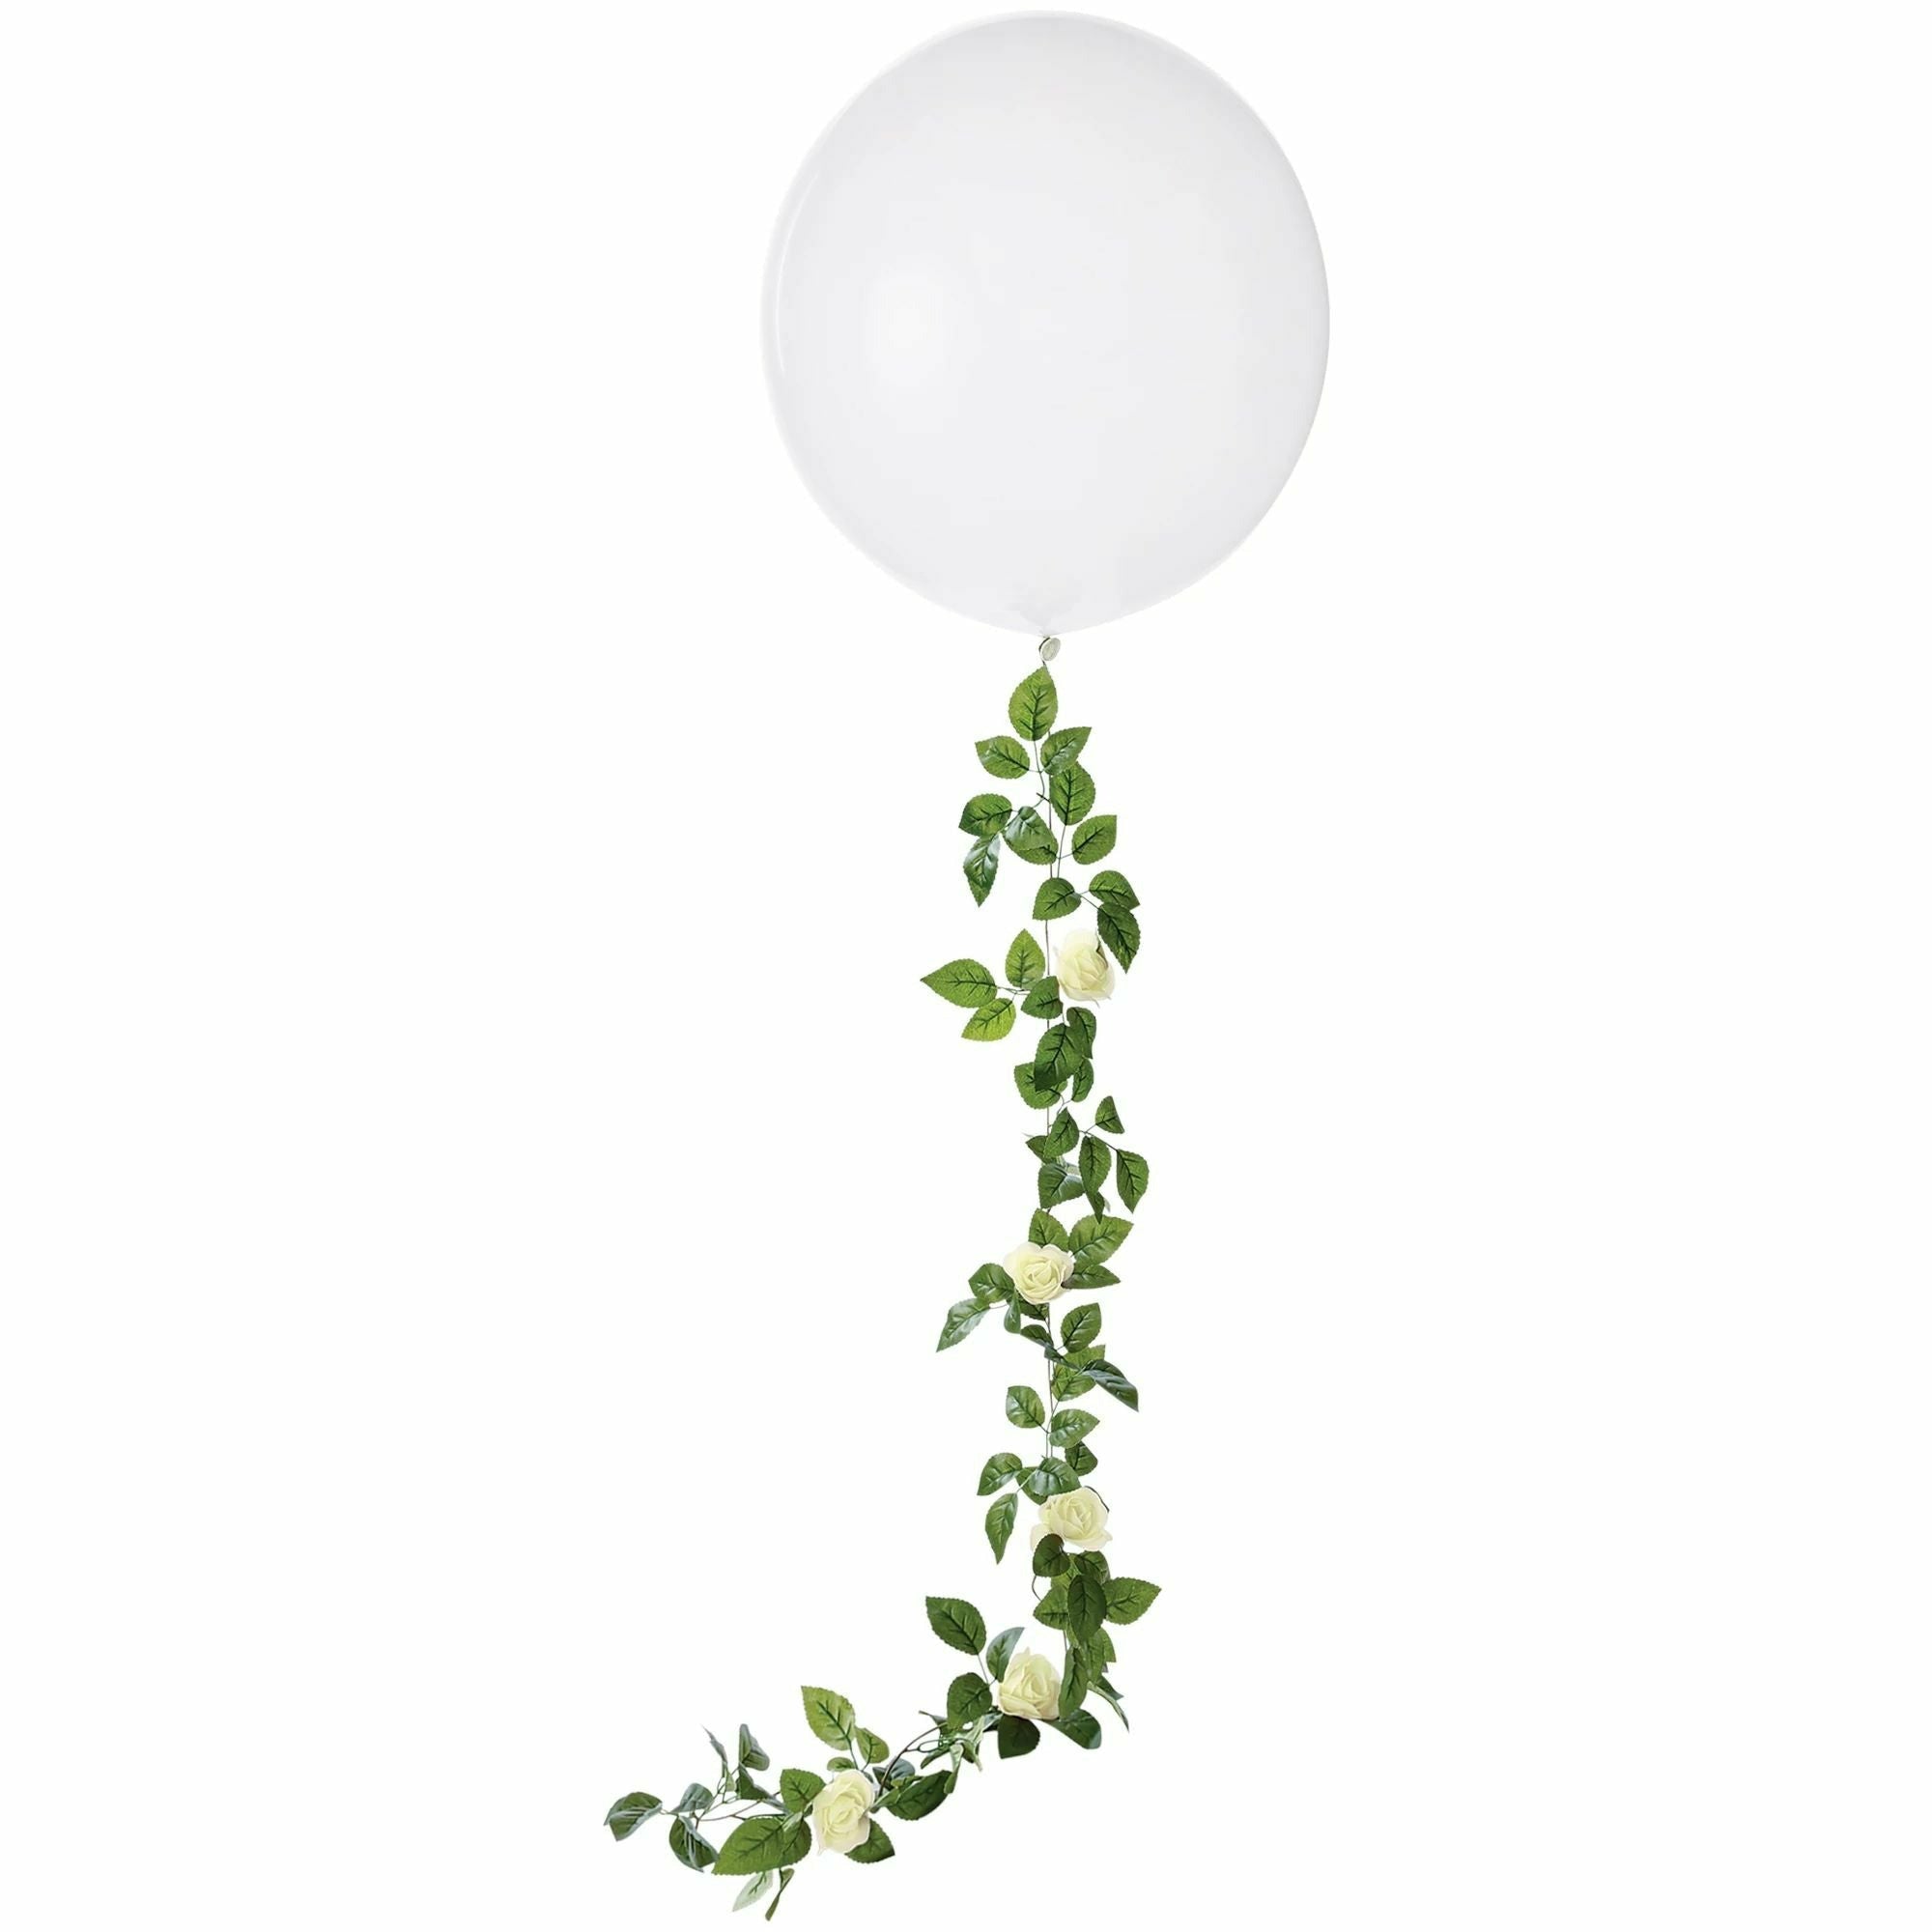 Amscan BALLOONS Latex Balloon w/ White Floral Balloon Tail